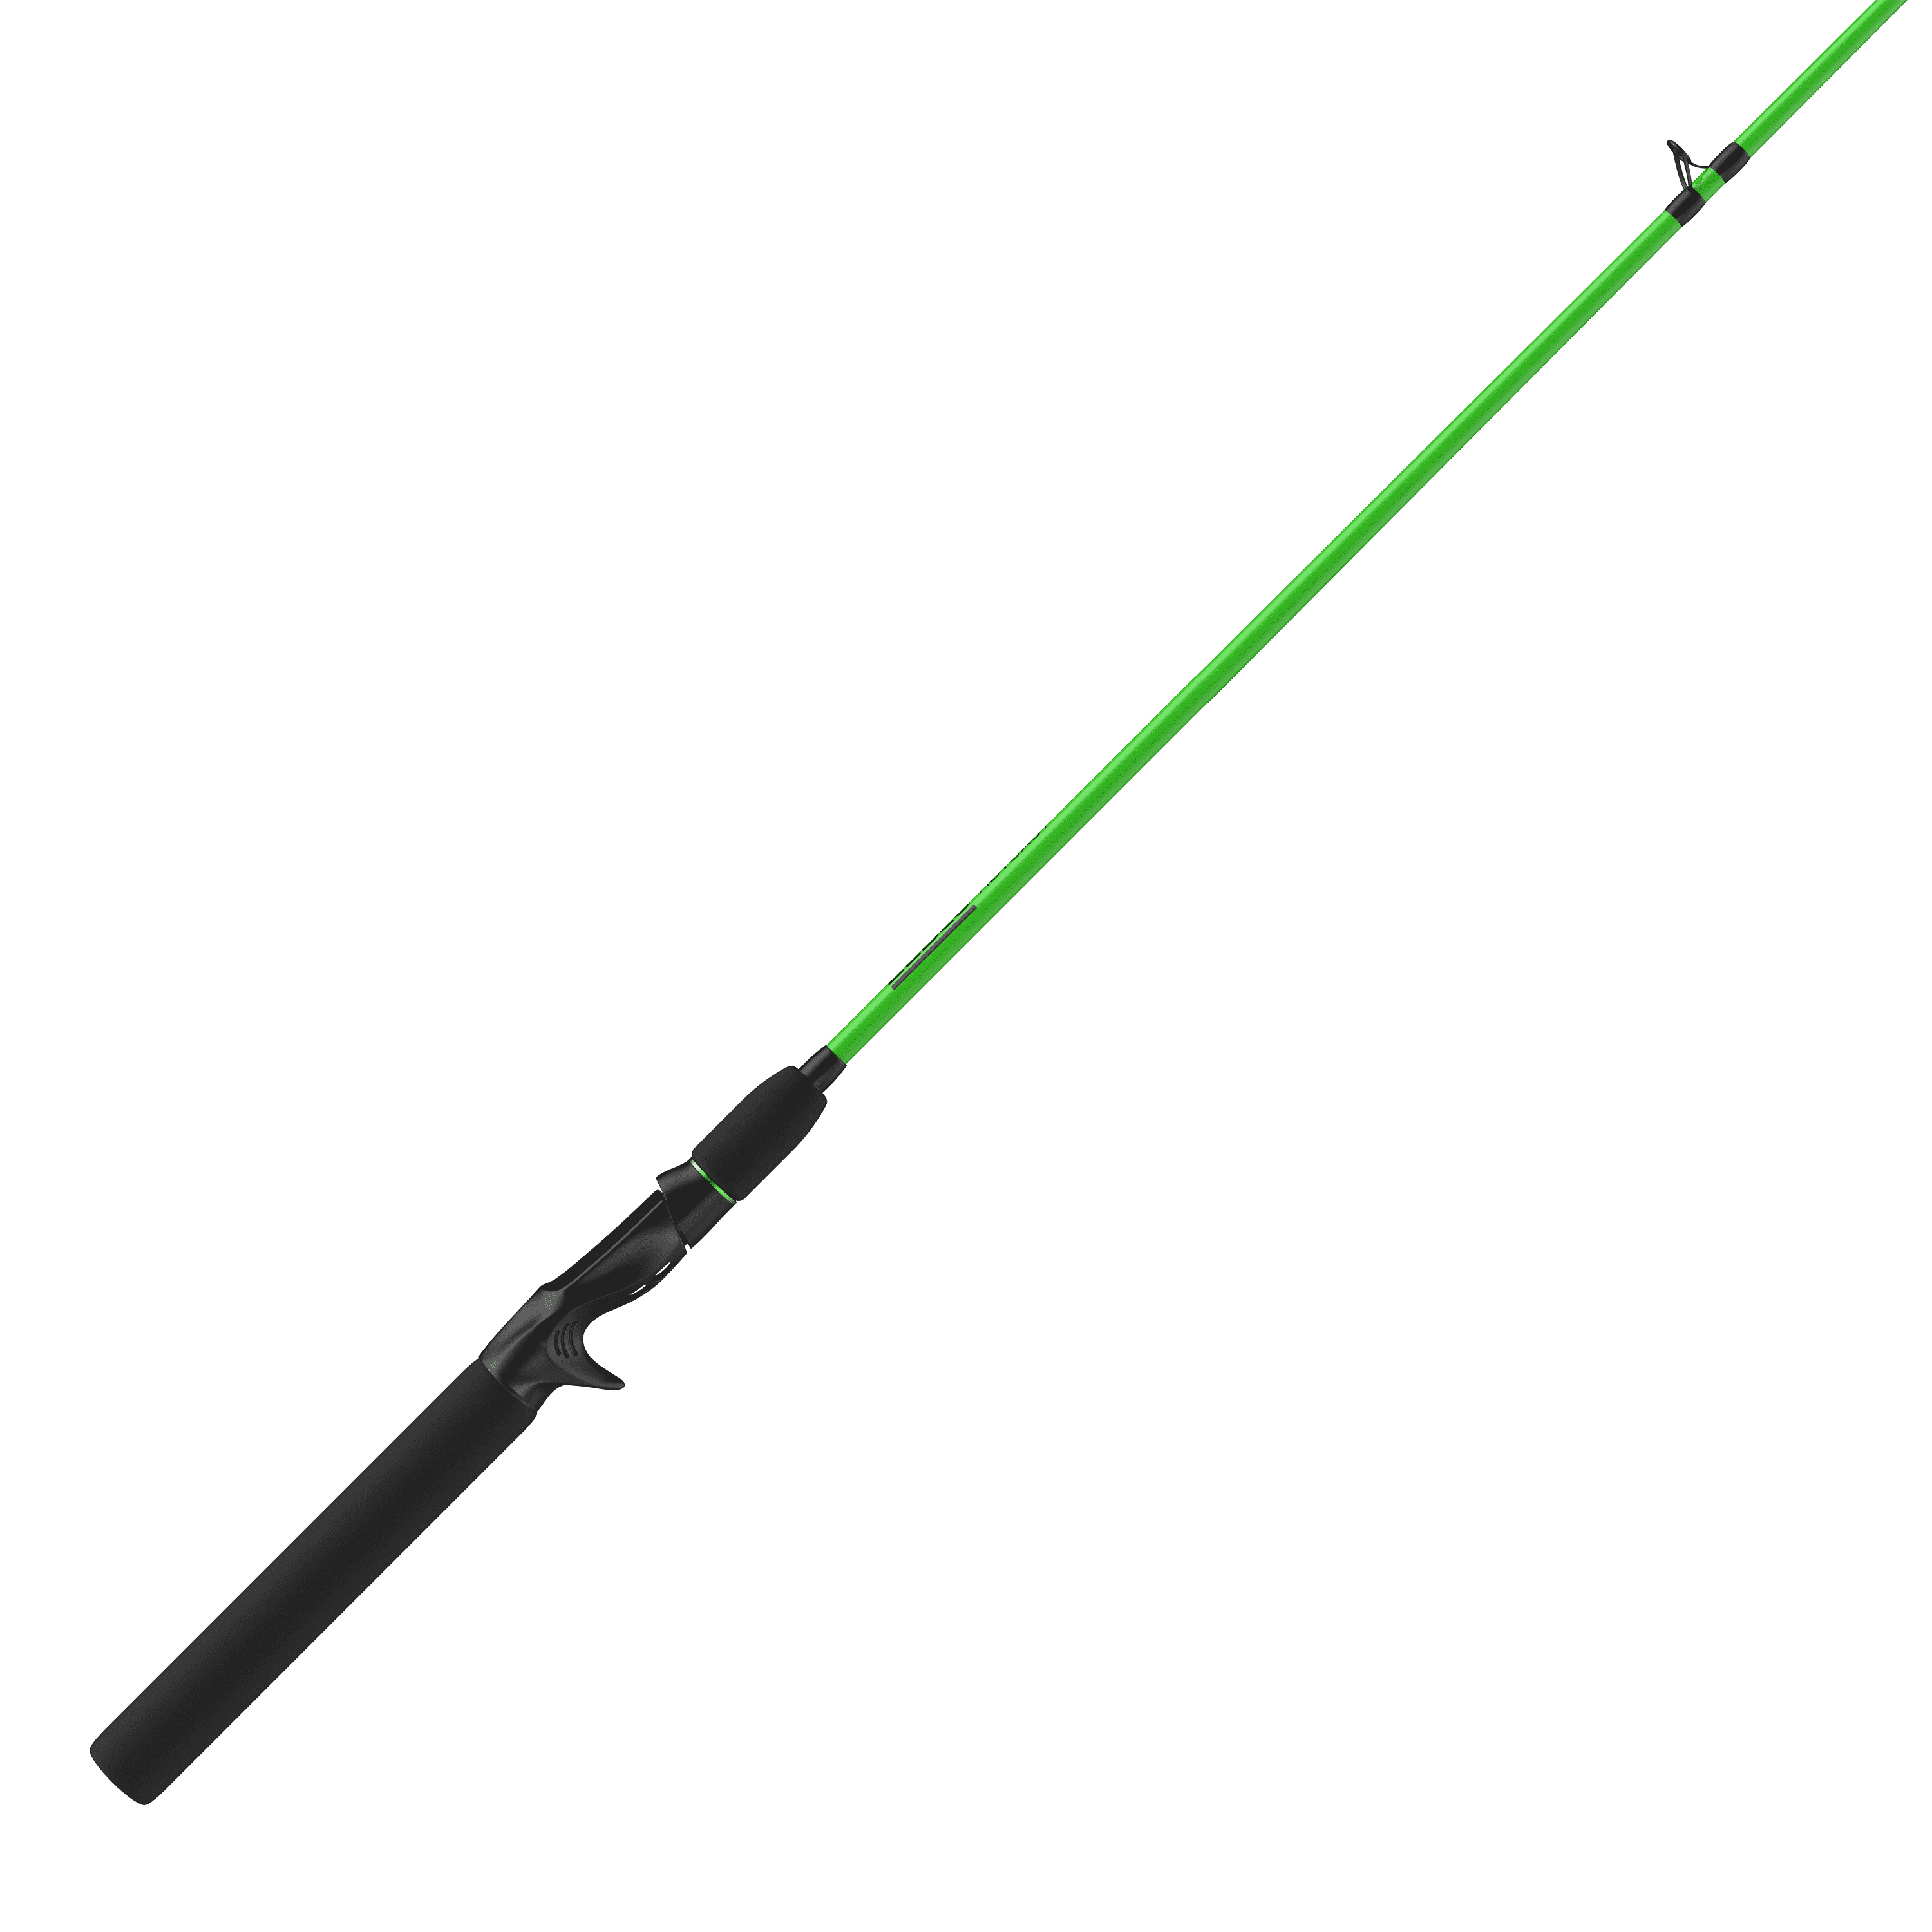 Zebco Hotcast Casting Rod, Durable Fiberglass Fishing Pole with